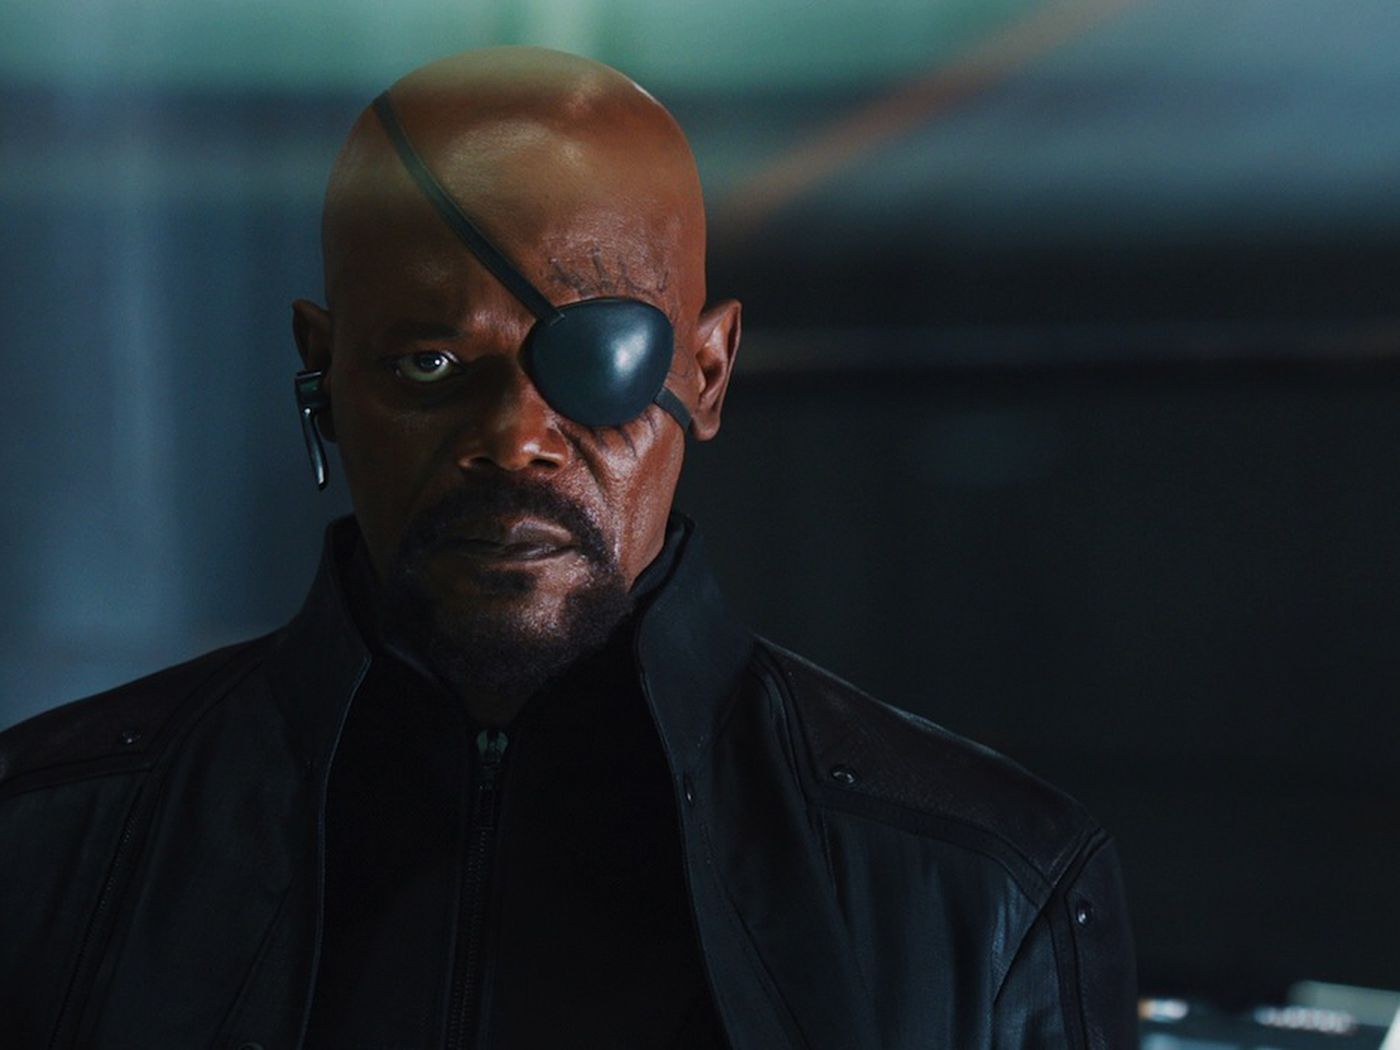 Samuel L. Jackson to star as Nick Fury in Disney Plus Marvel TV series